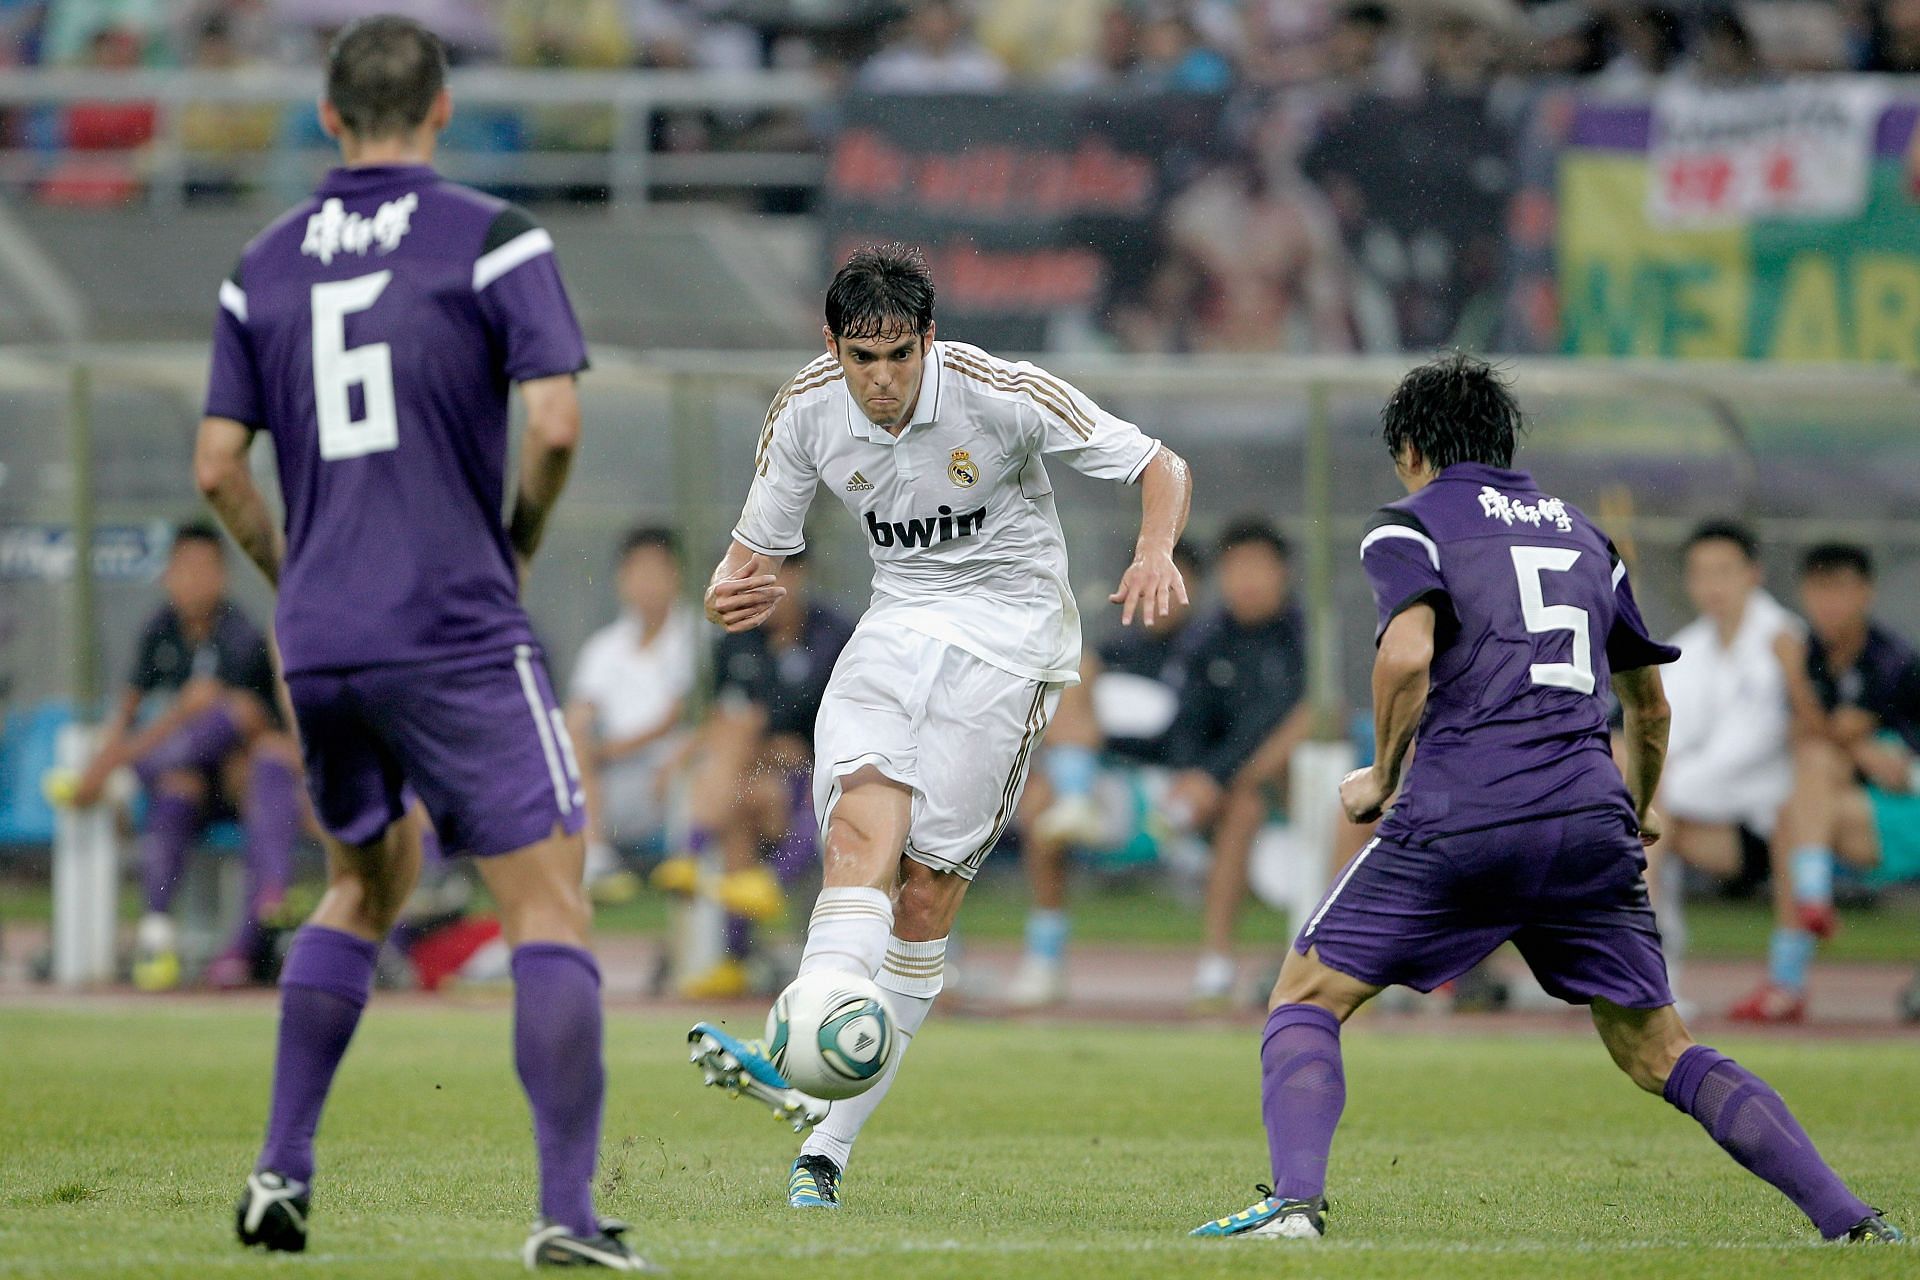 Tianjin Teda v Real Madrid - Real Madrid's China Tour